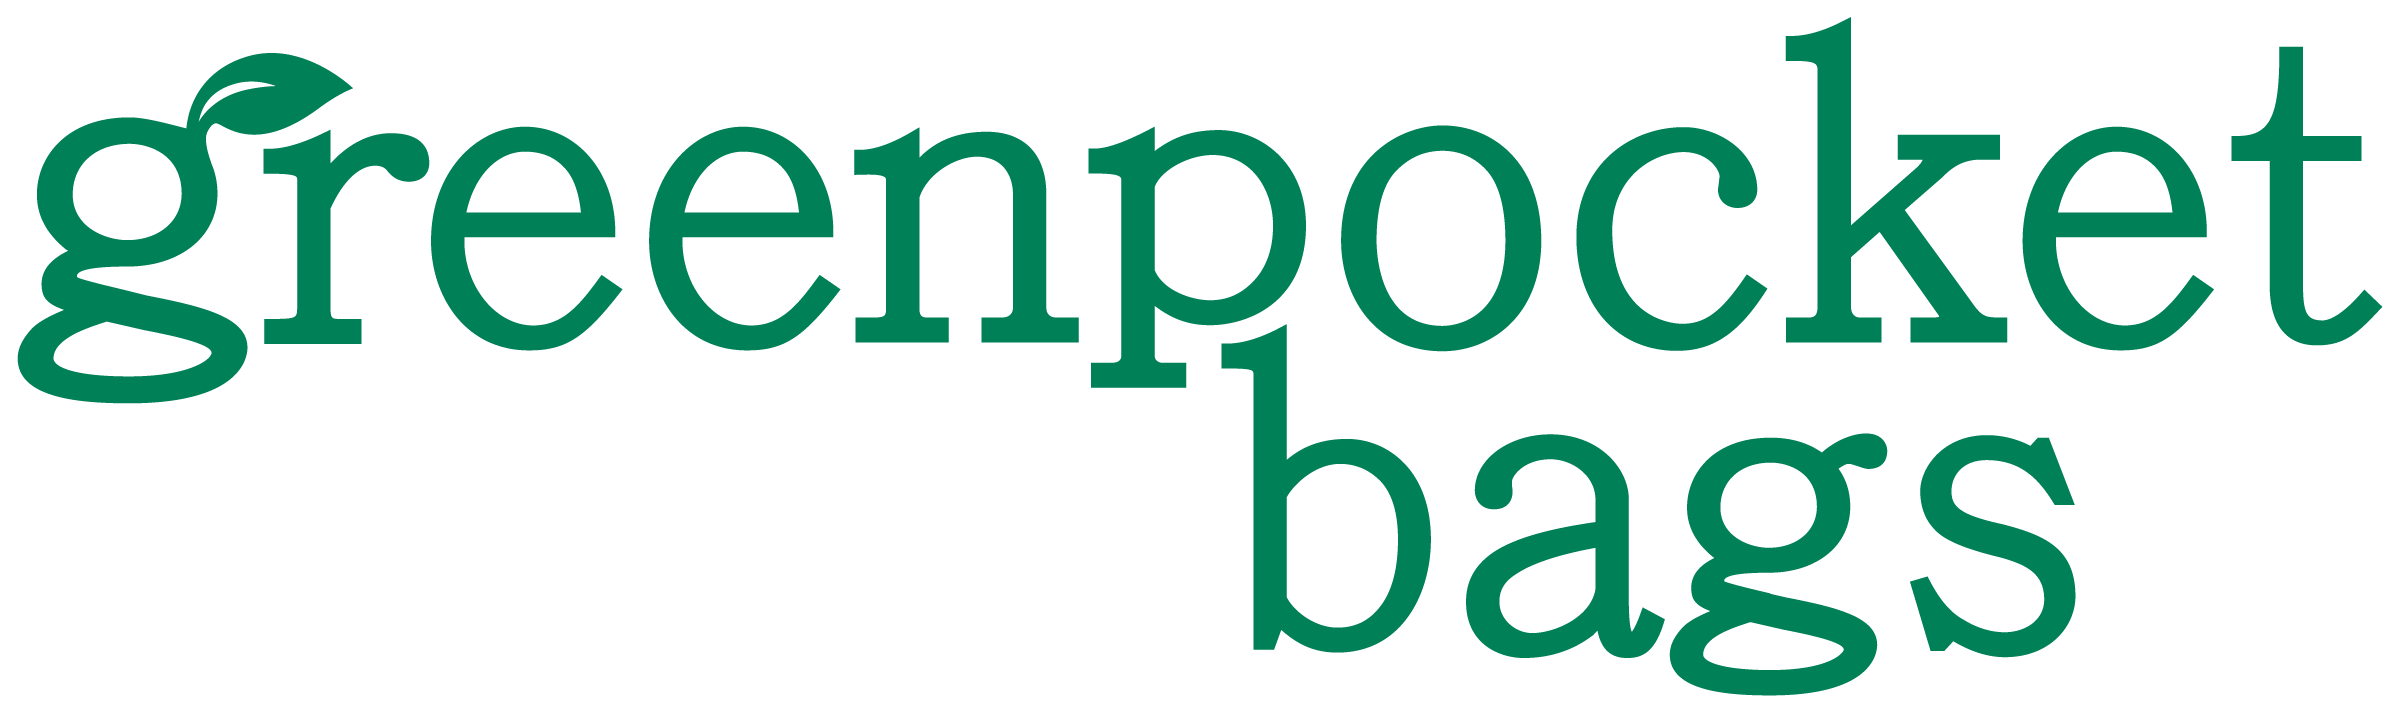 Greenpocket bags logo